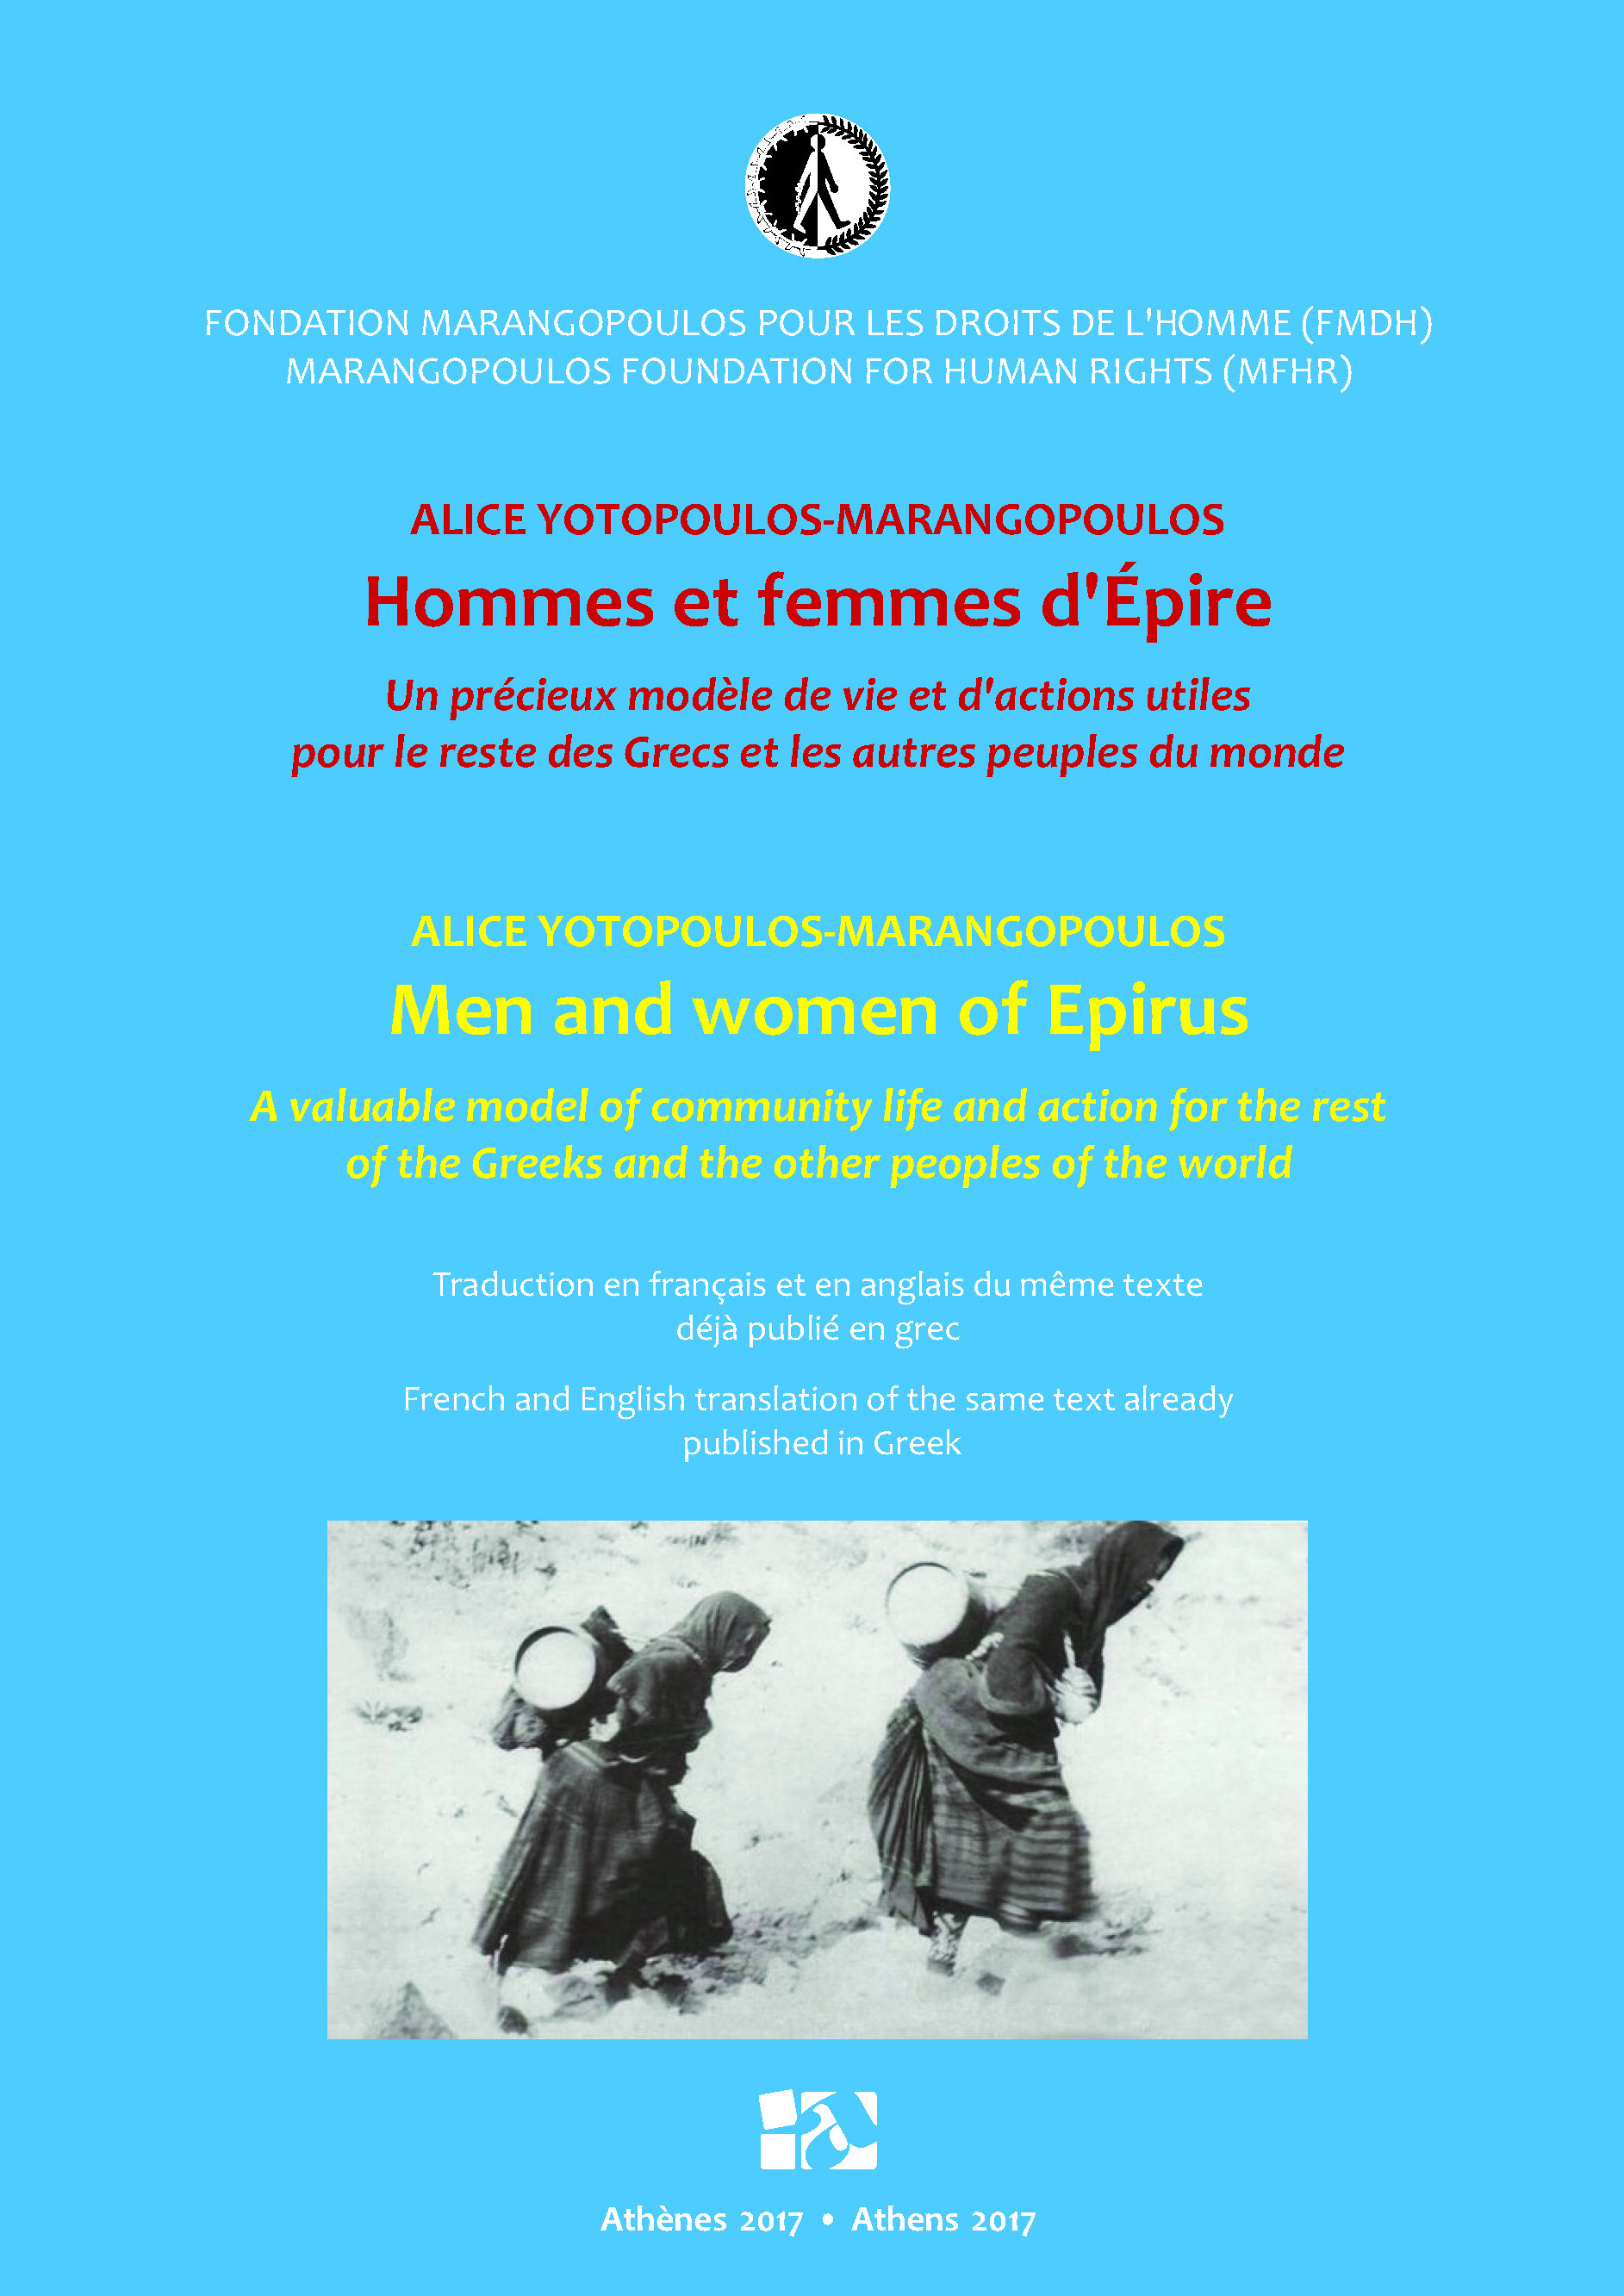 Hommes et femmes d' Epire - Men and women of Epirus